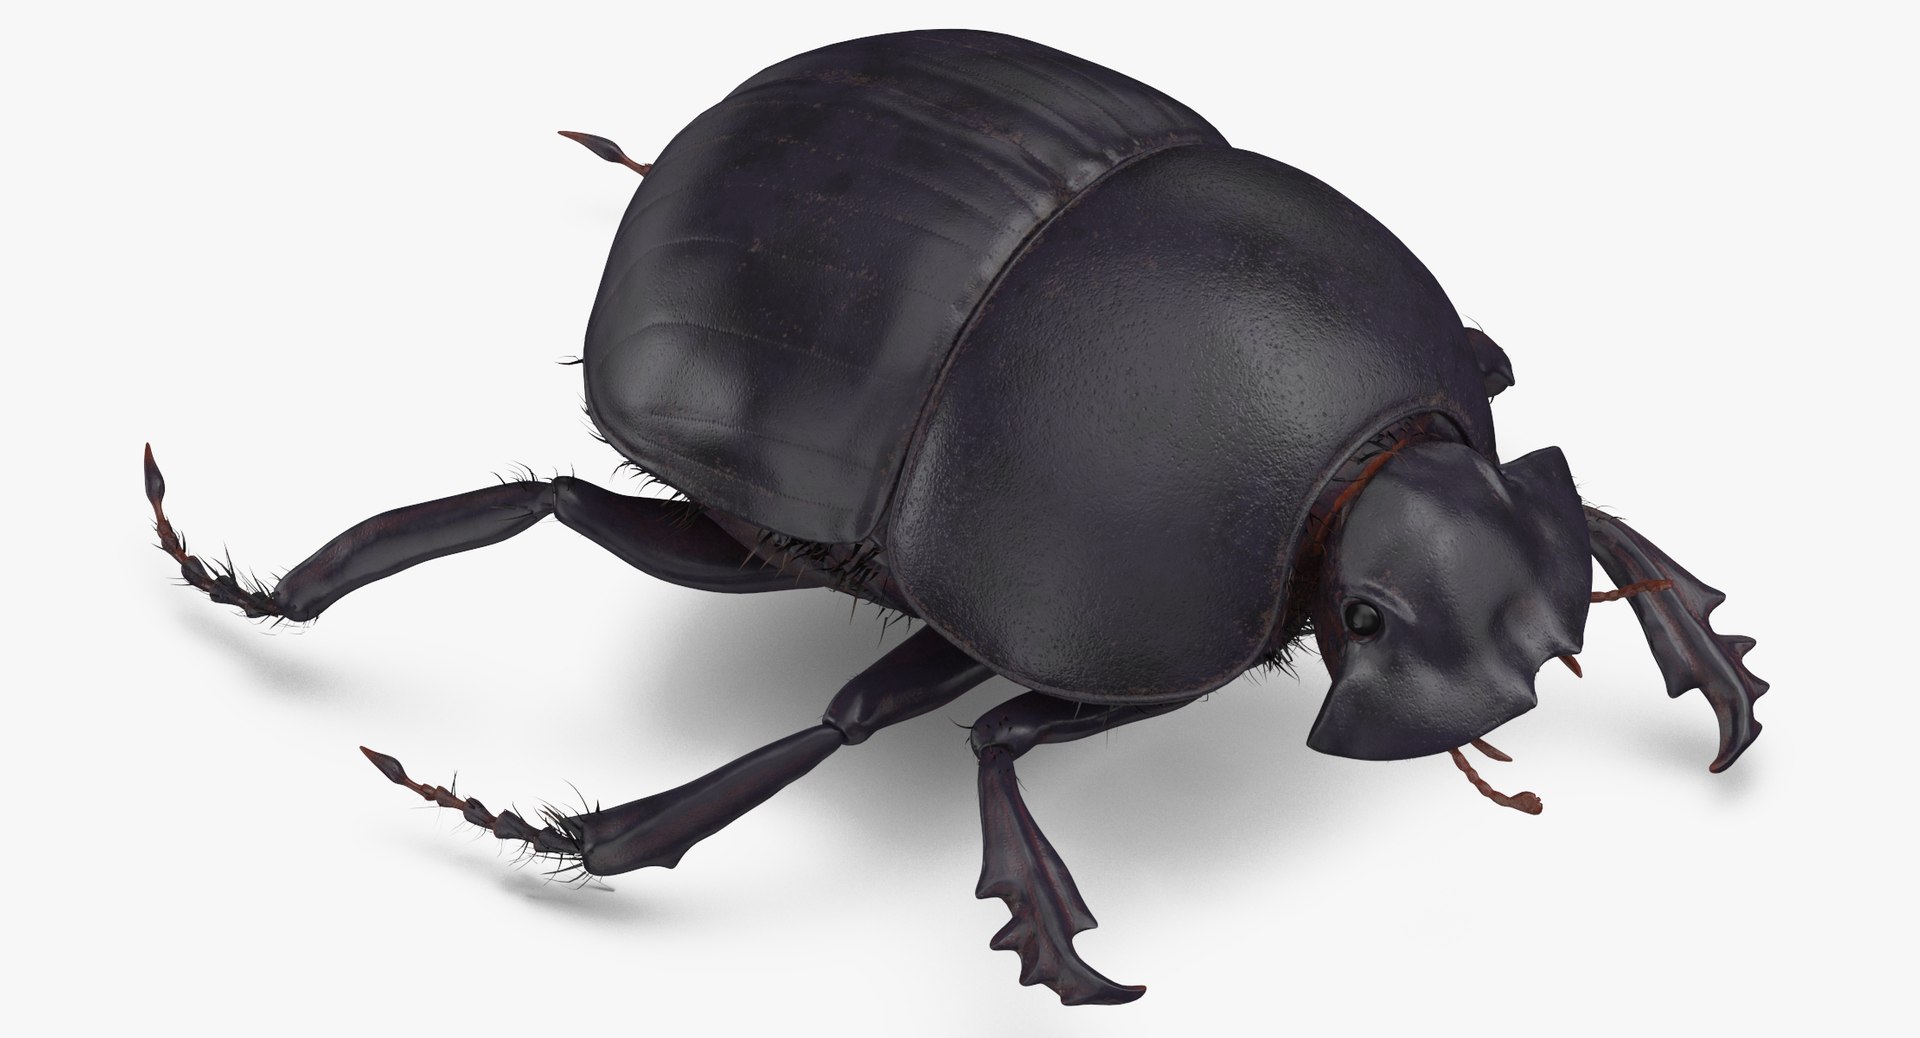 Black scarab beetle poses 3D model - TurboSquid 1398905